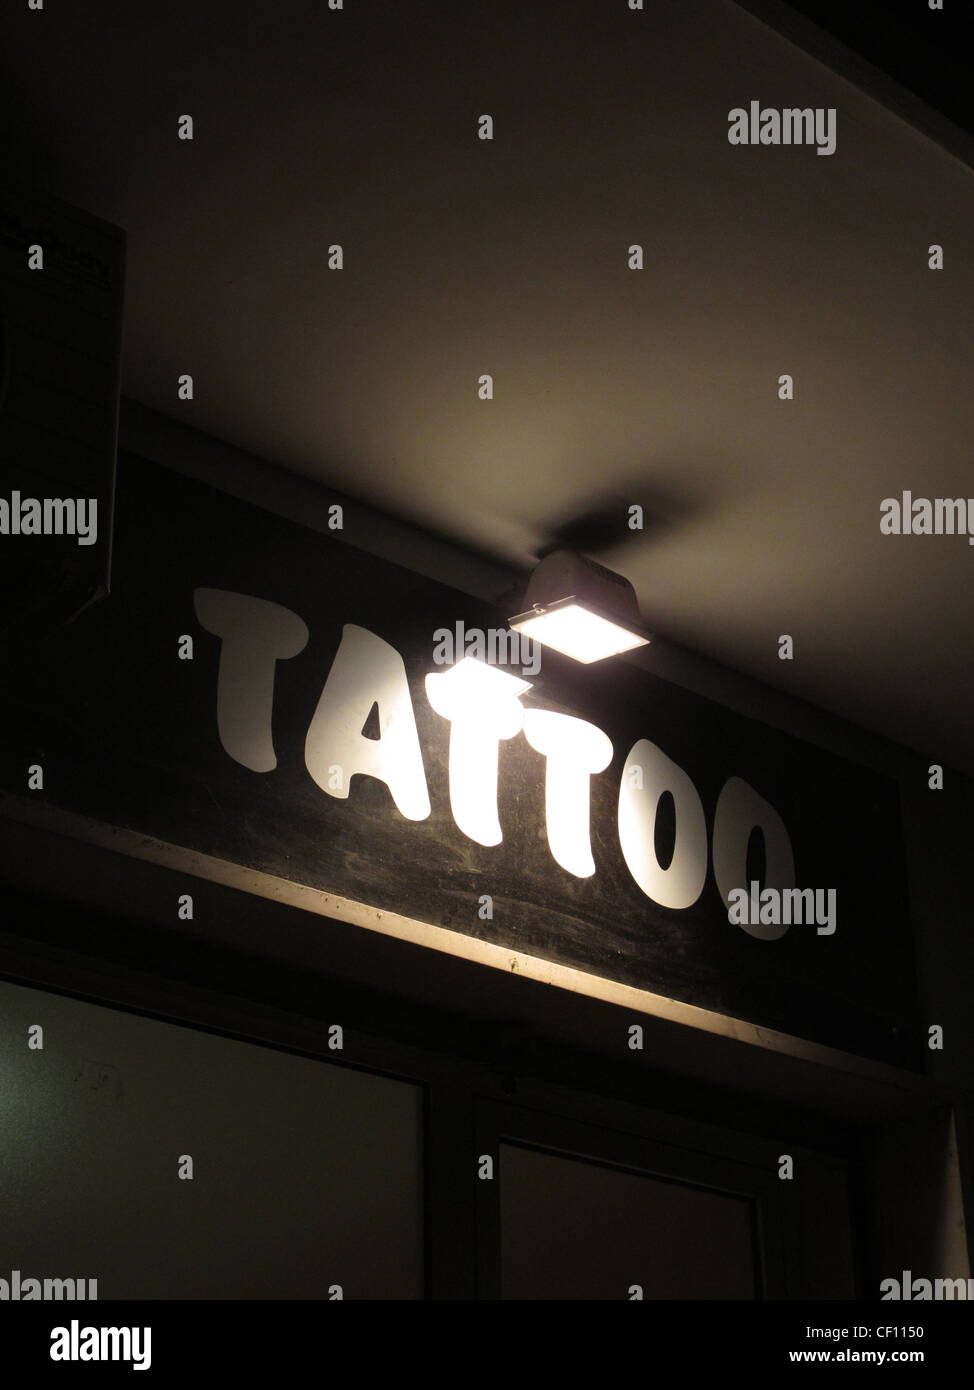 tattoo shop sign notice at night Stock Photo - Alamy